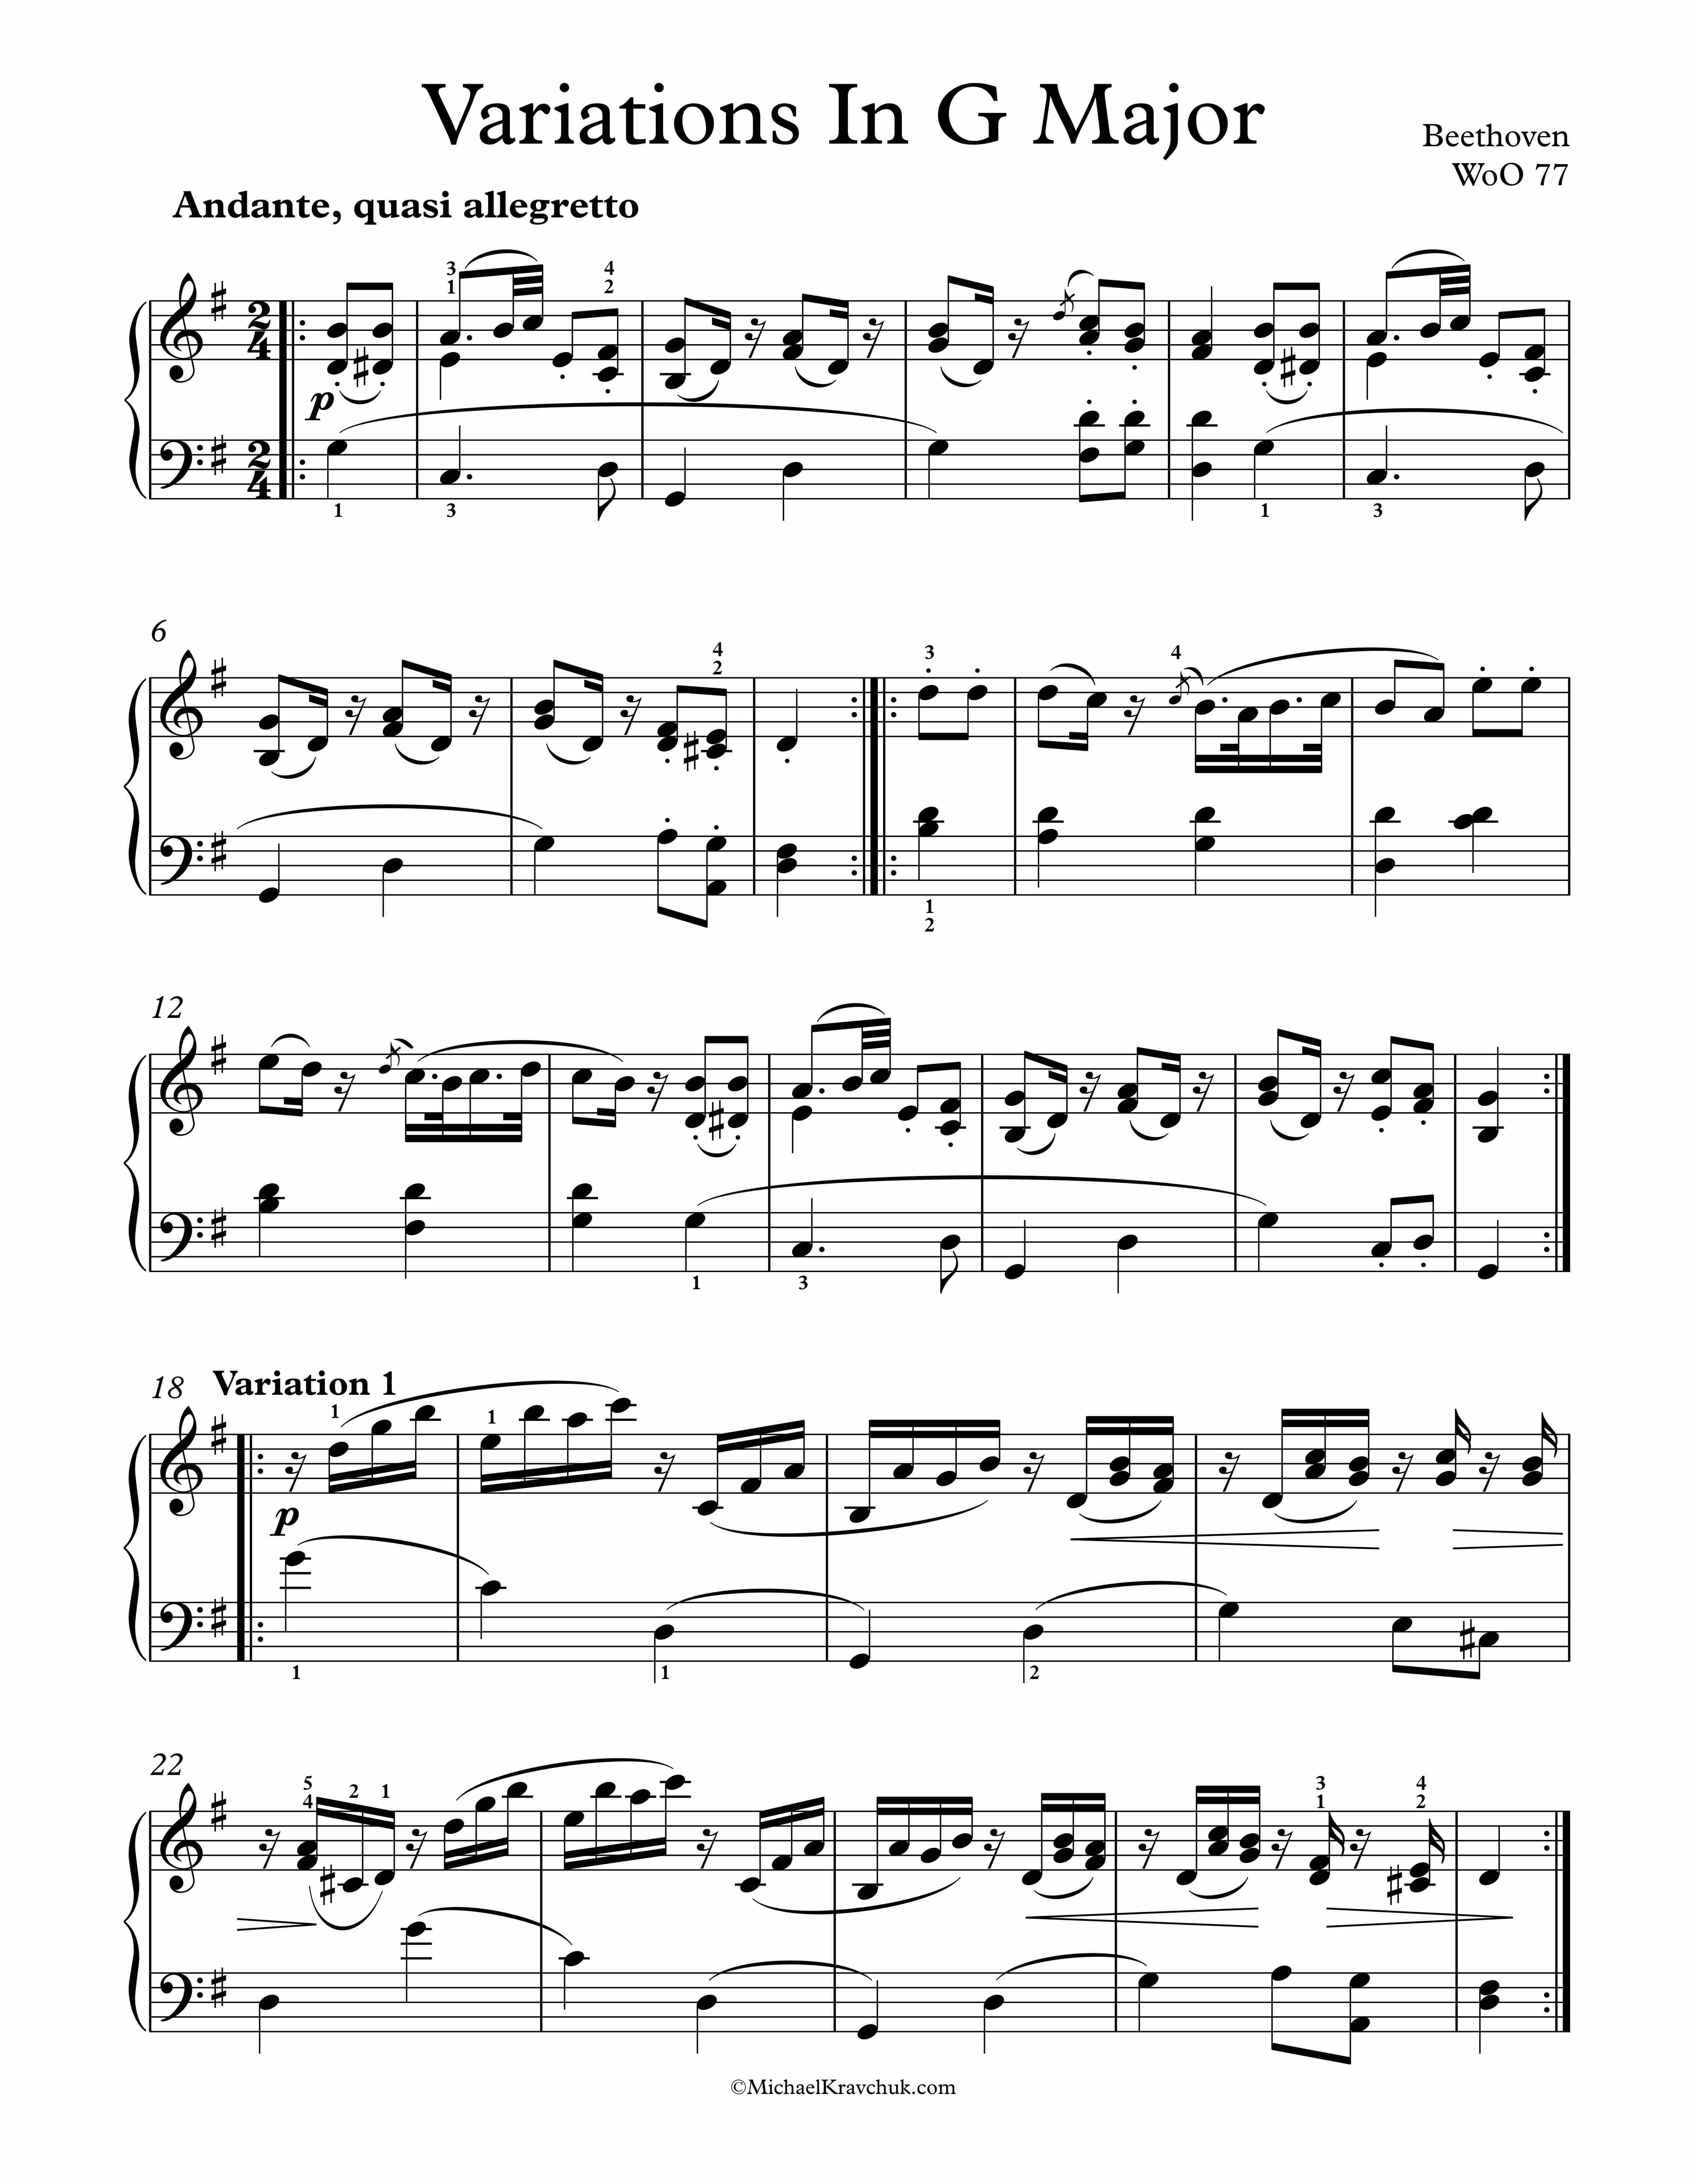 Free Piano Sheet Music - Variations In G Major WoO 77 - Beethoven